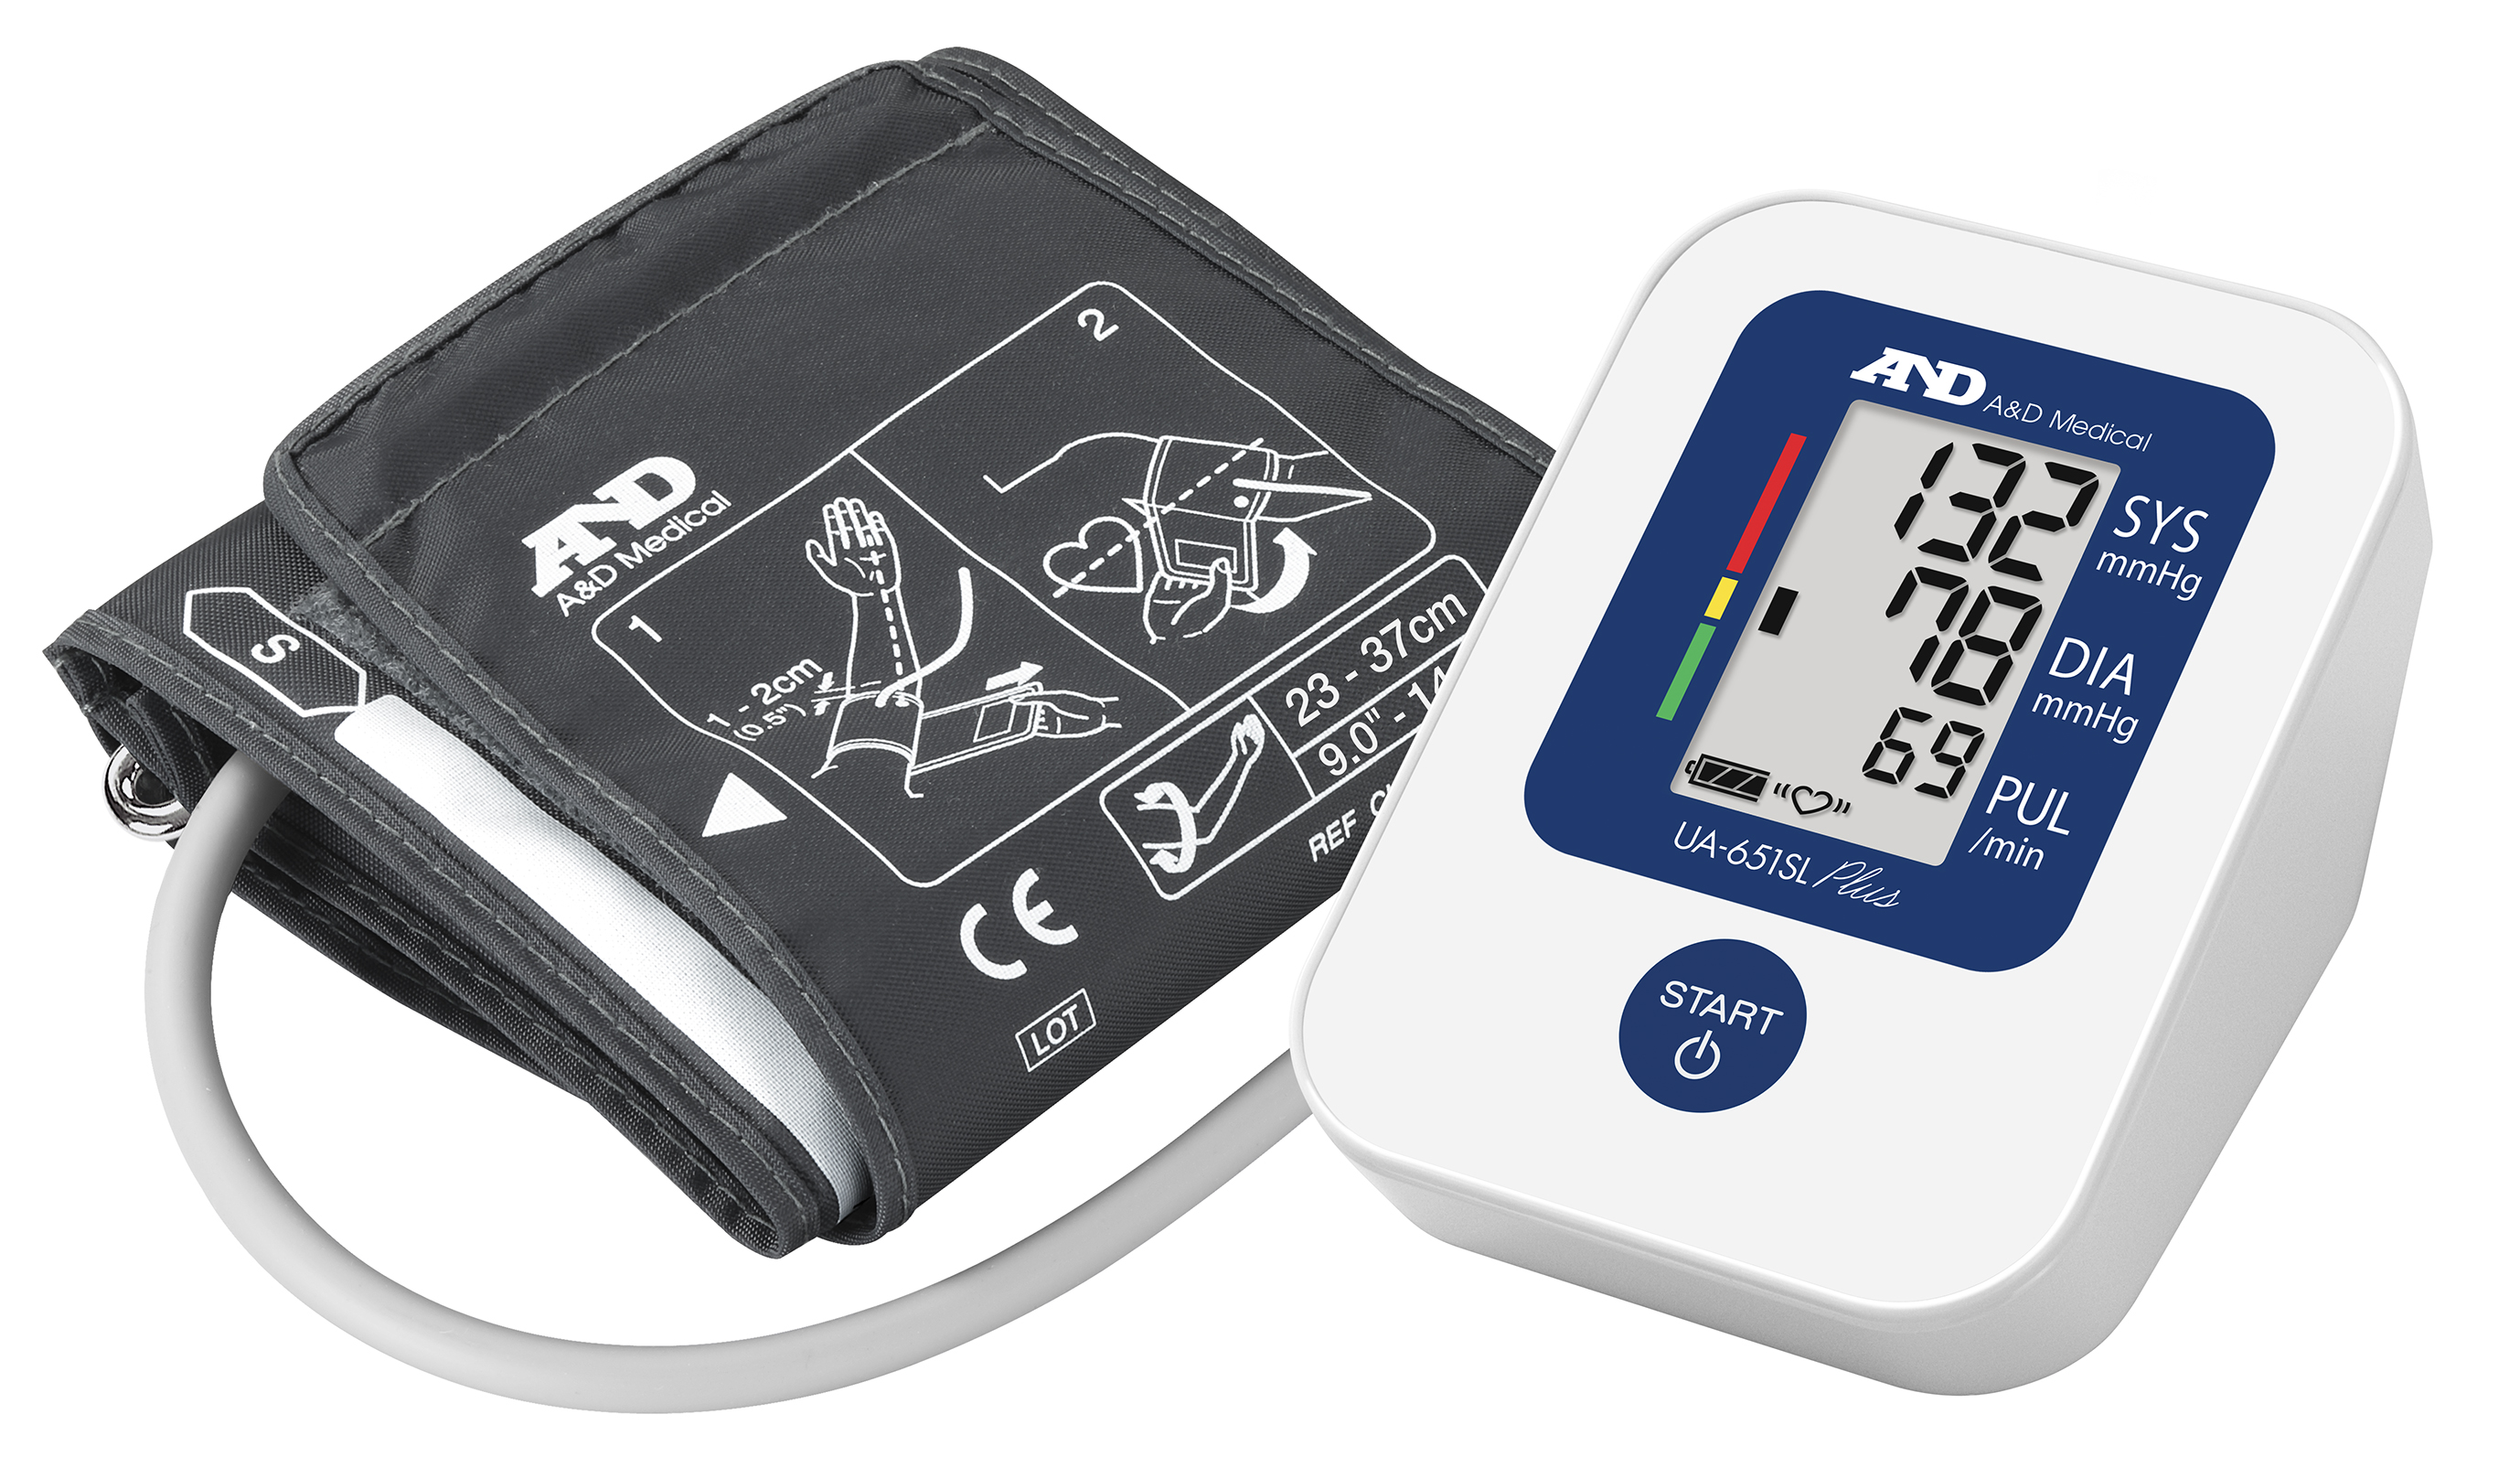 A&D Medical Professional Blood Pressure Monitor (UM-211)